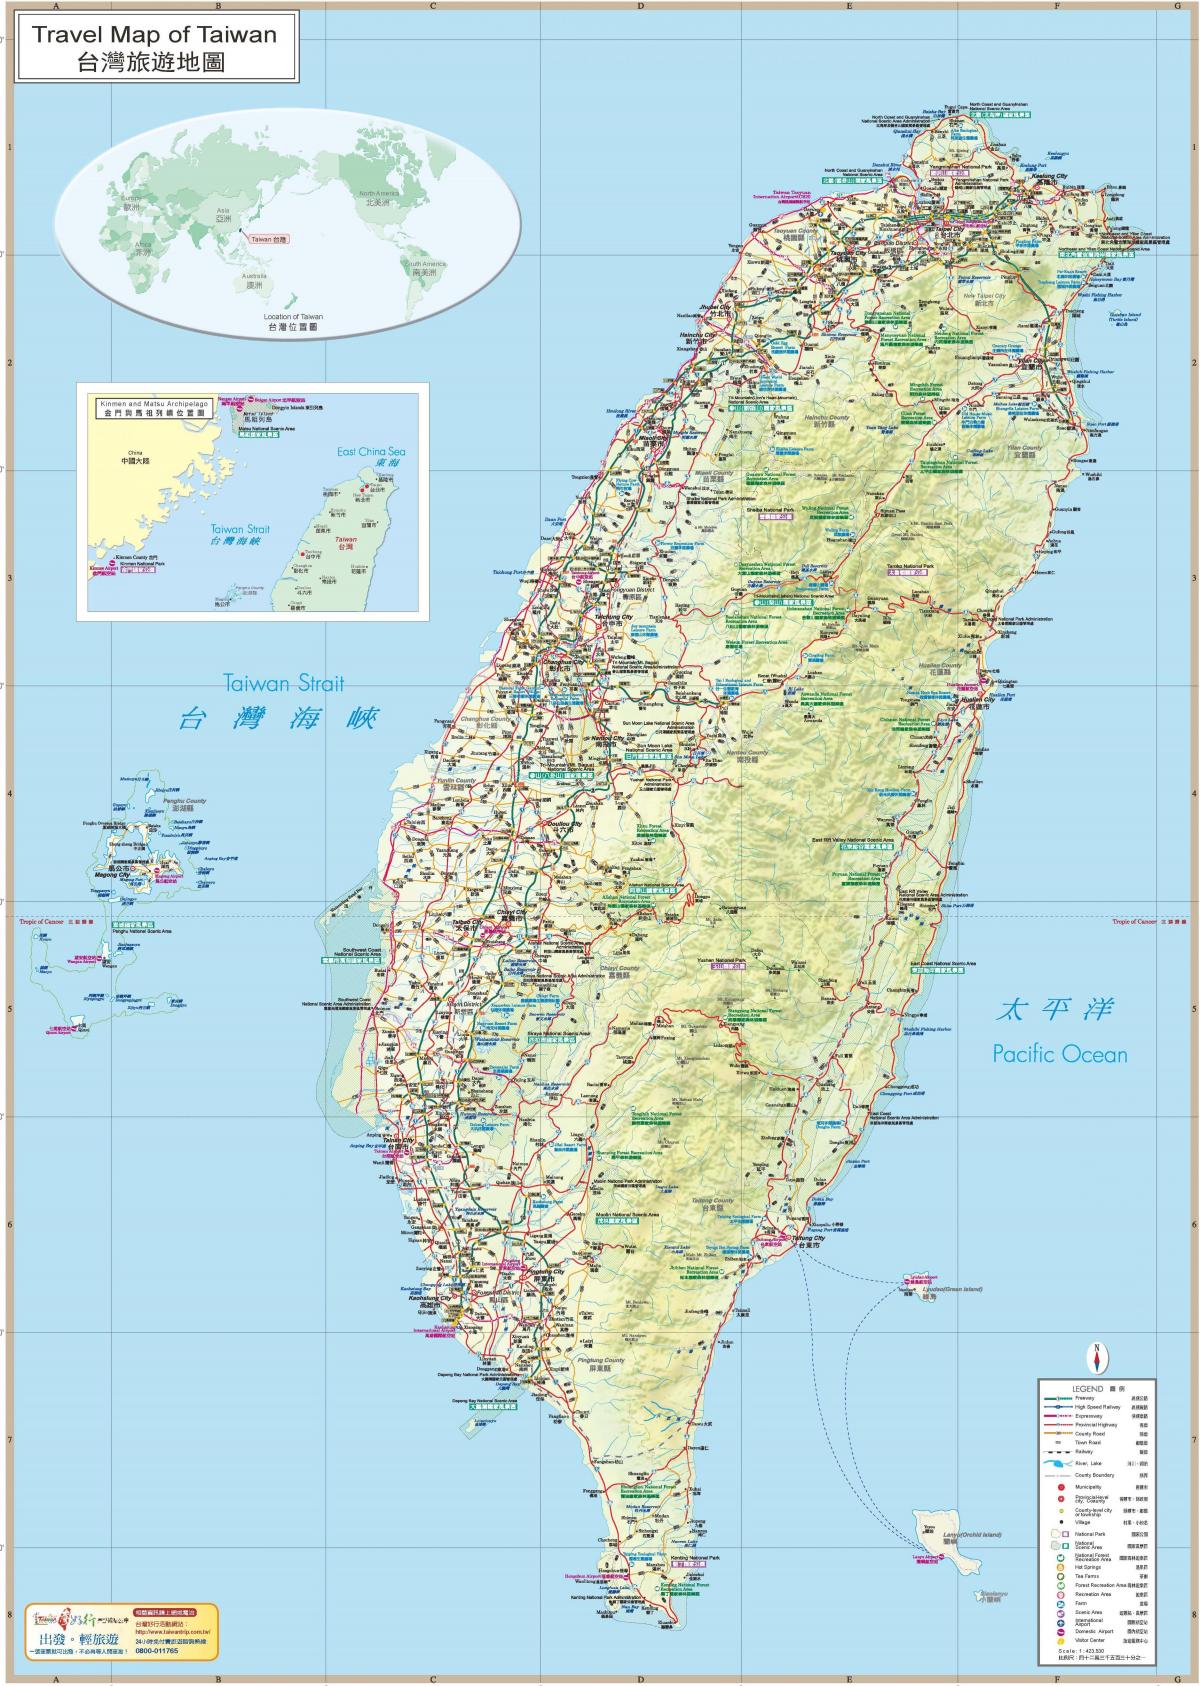 Taiwan travel guide kaart